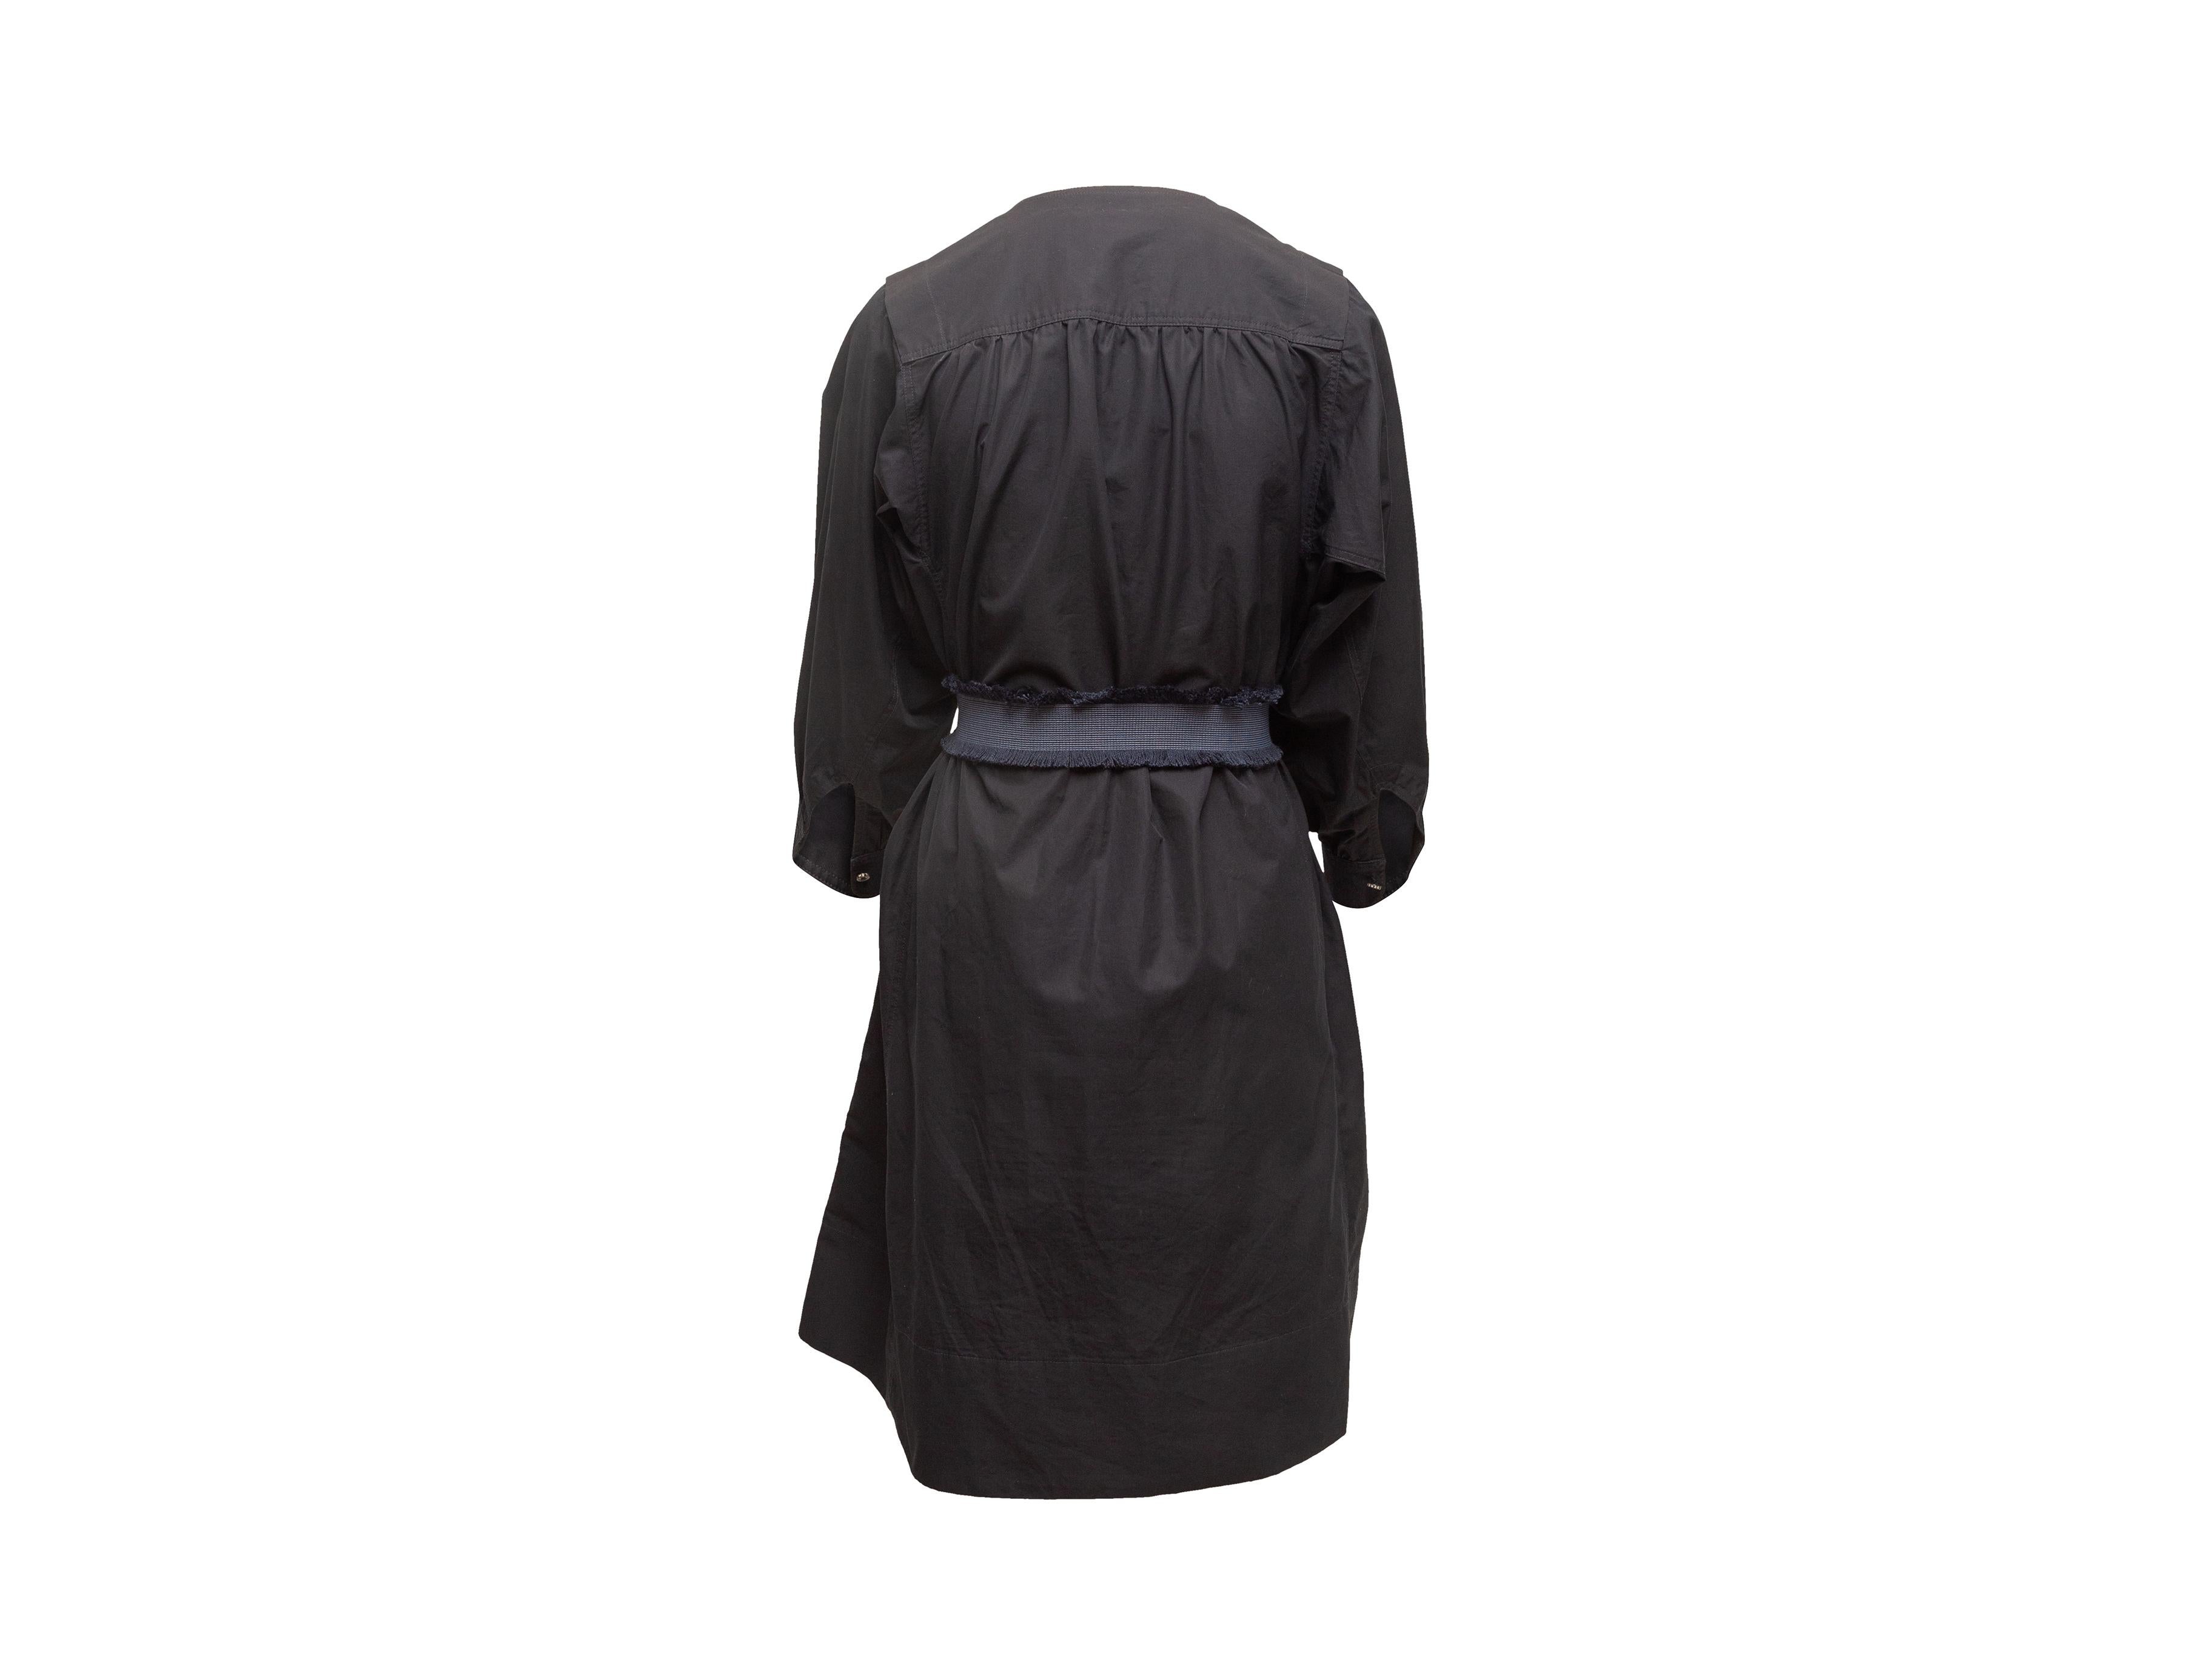 Product details: Navy cotton long sleeve dress by Derek Lam. Crew neck. Belt at waist. 32